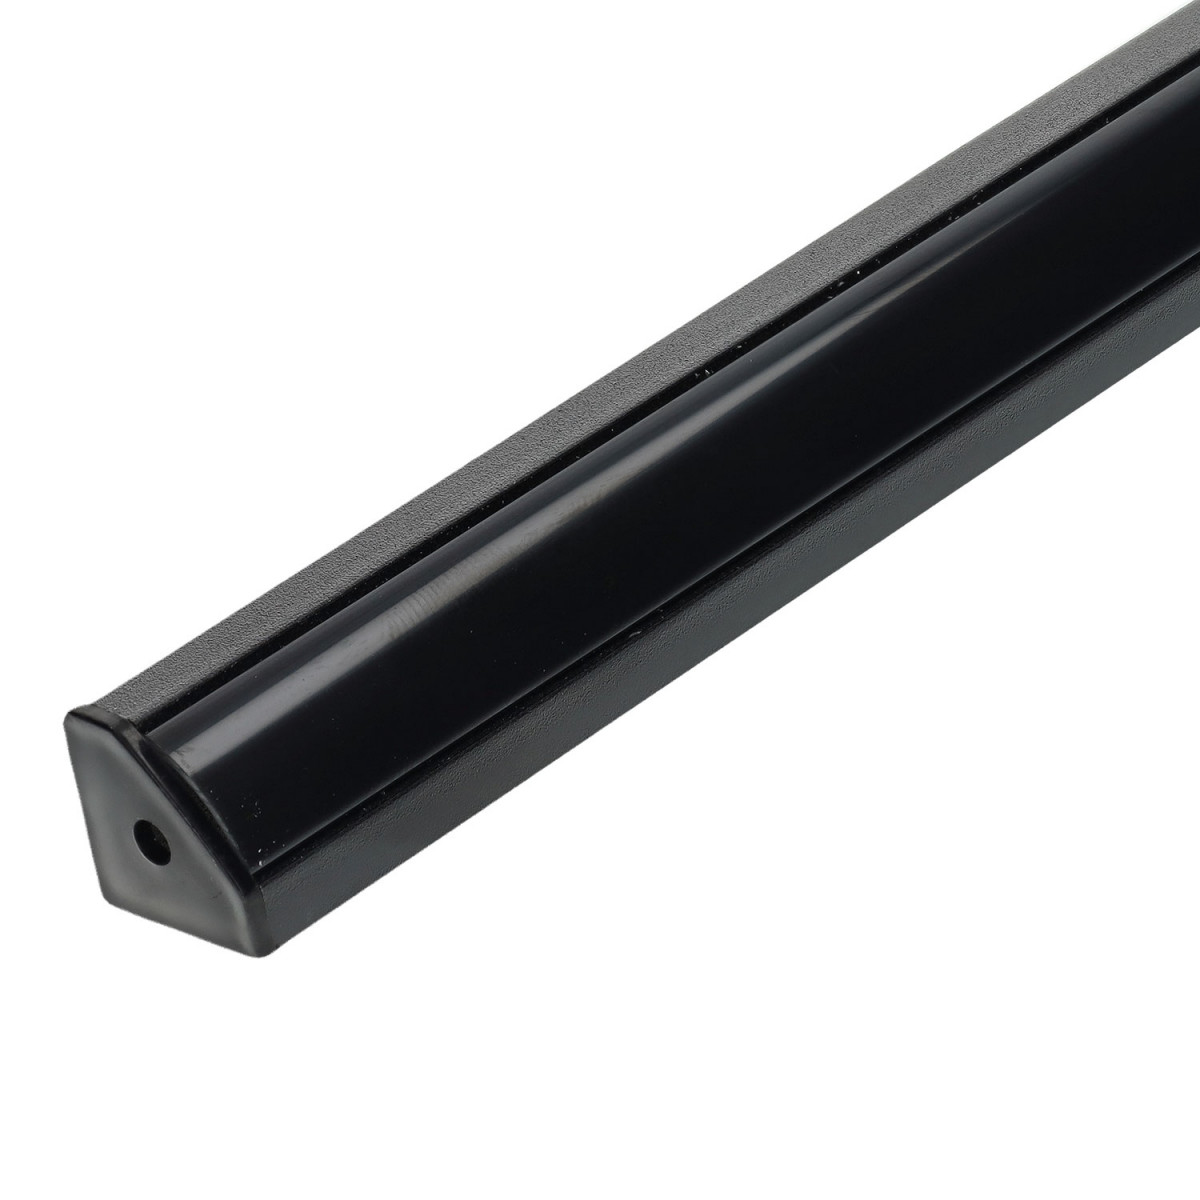 Angle profil bande d’aluminium led 1m noir